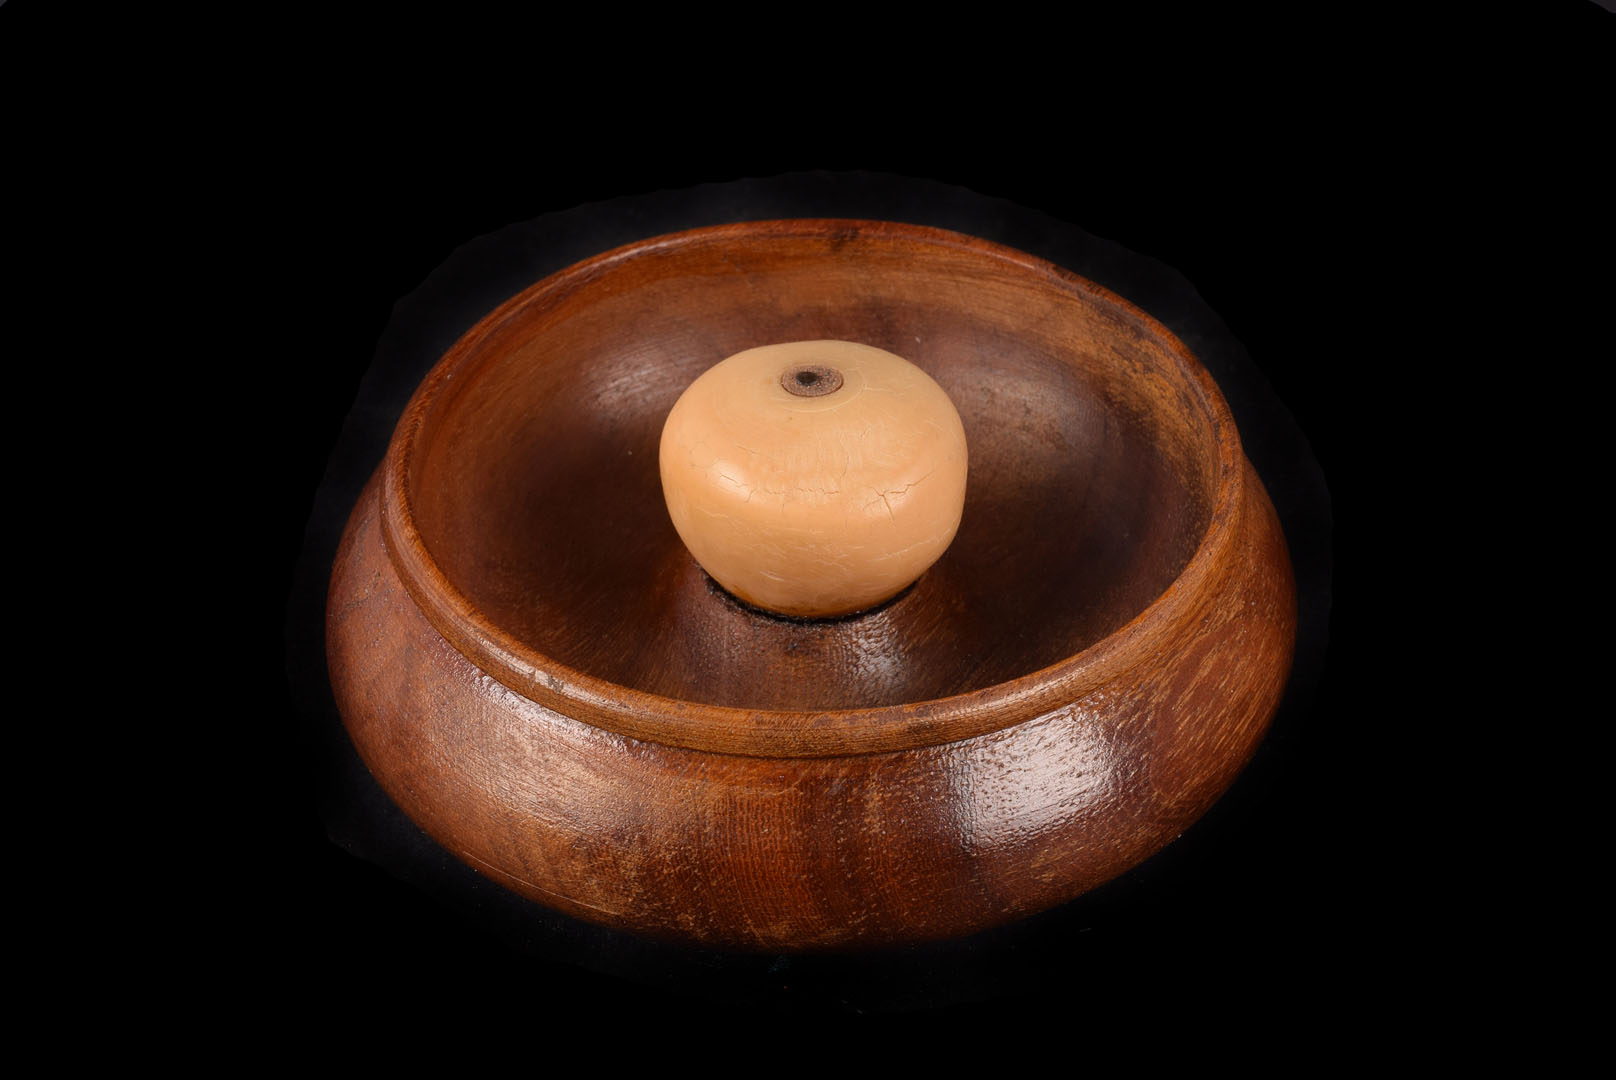 An Edwardian period souvenir from Victoria Falls by J.W. Soper, the turned Rhodesian teak bowl